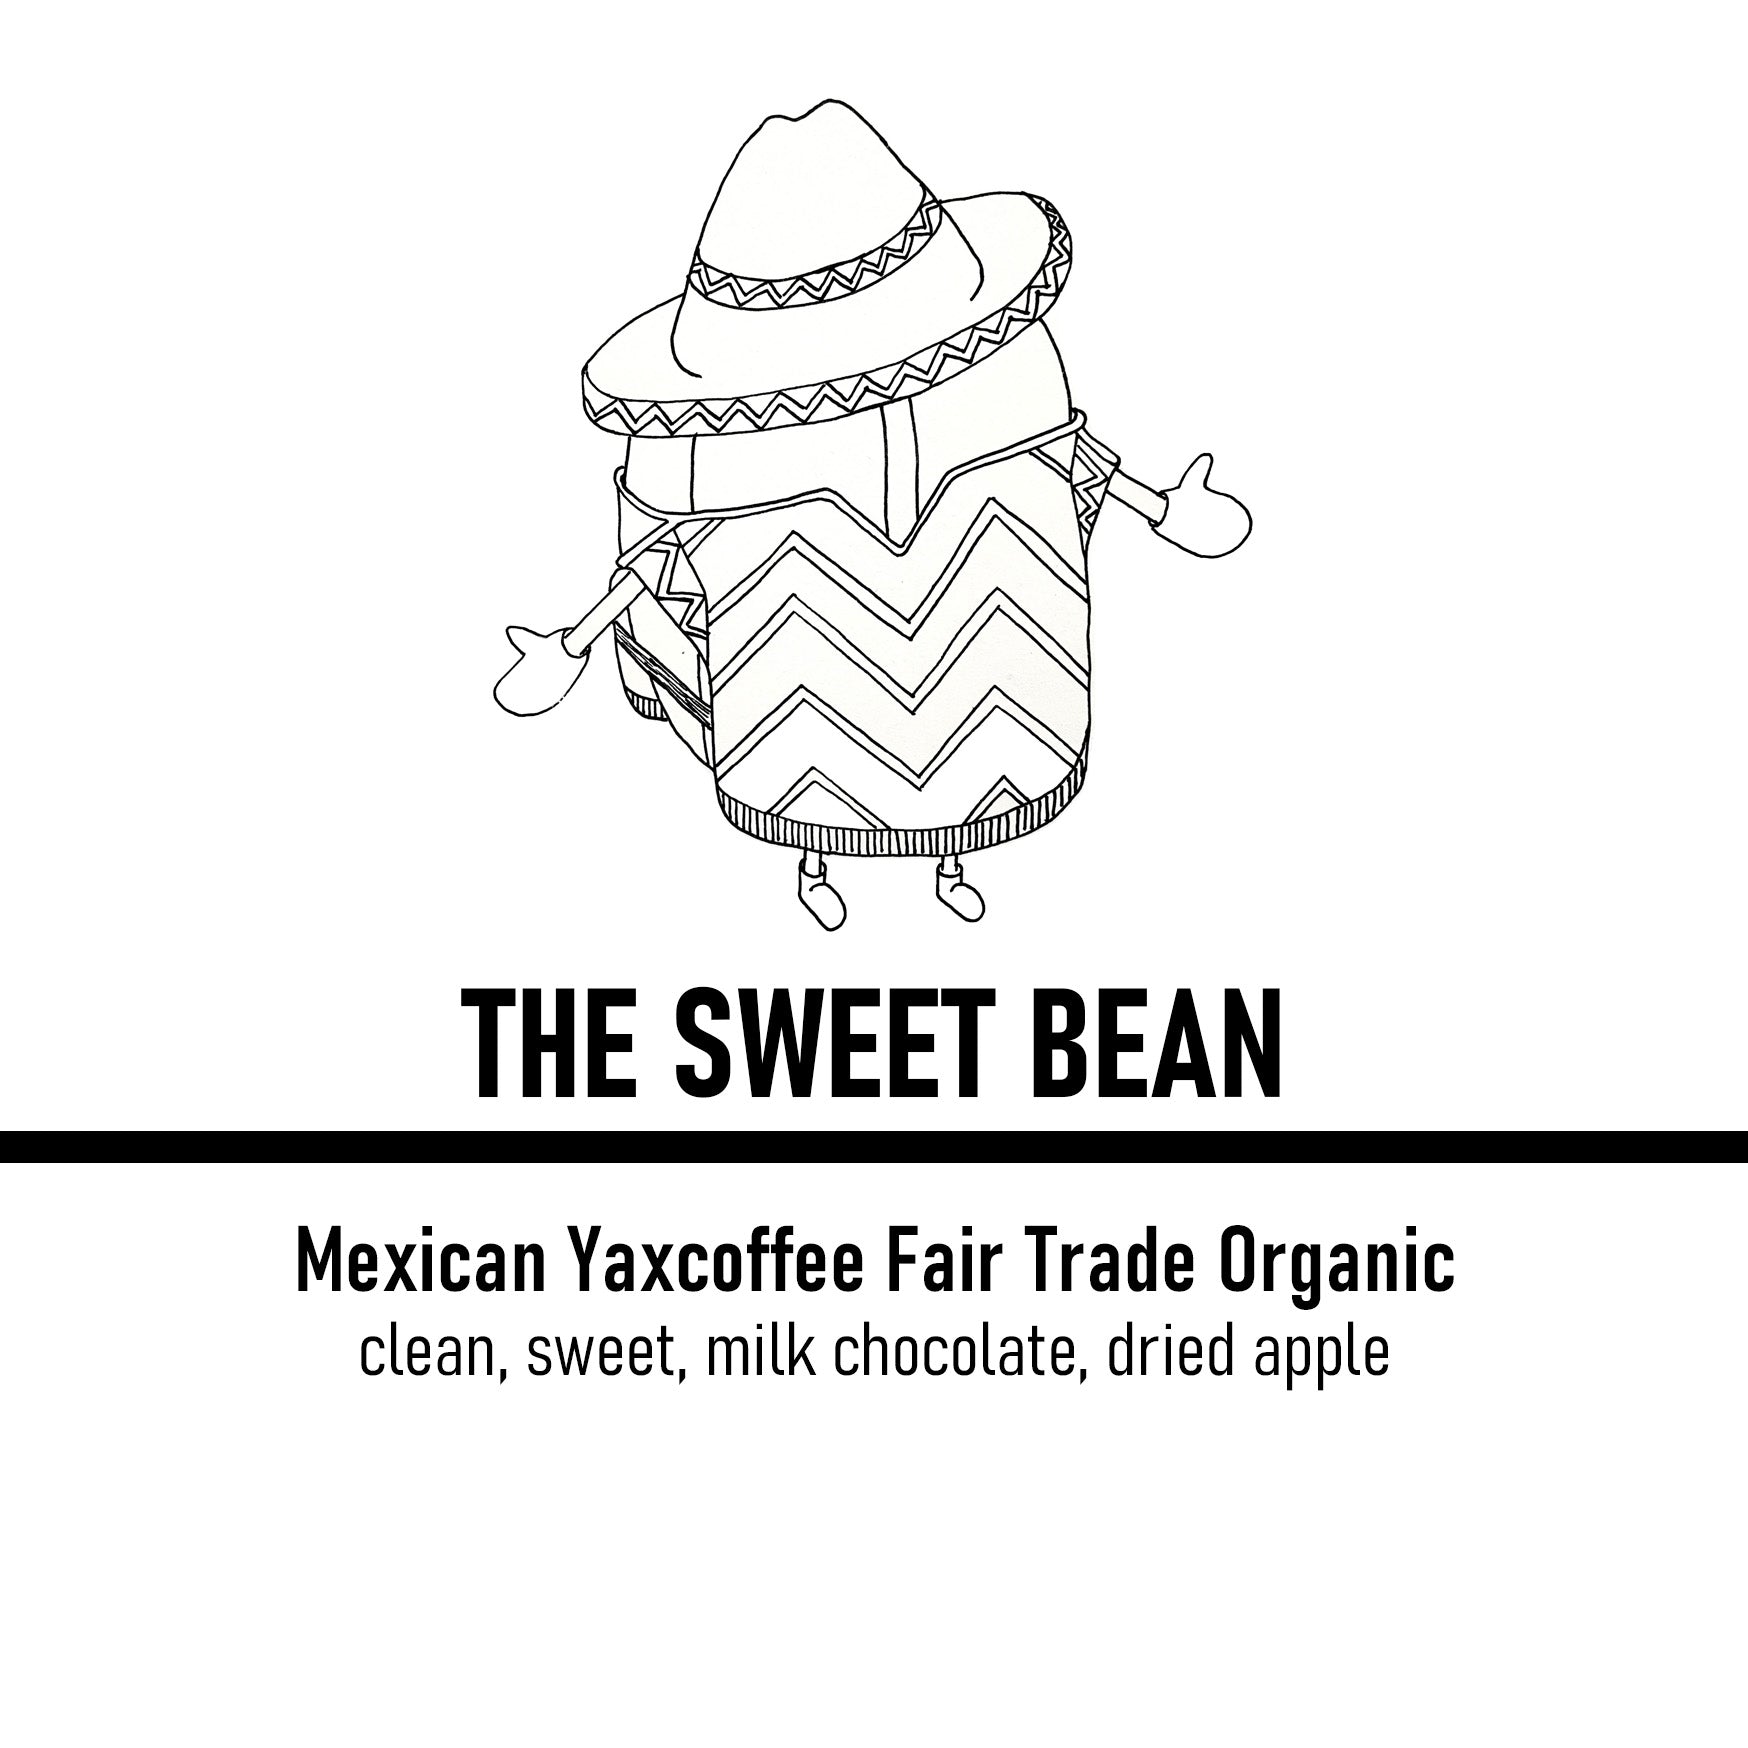 Fair Trade Organic Subscription